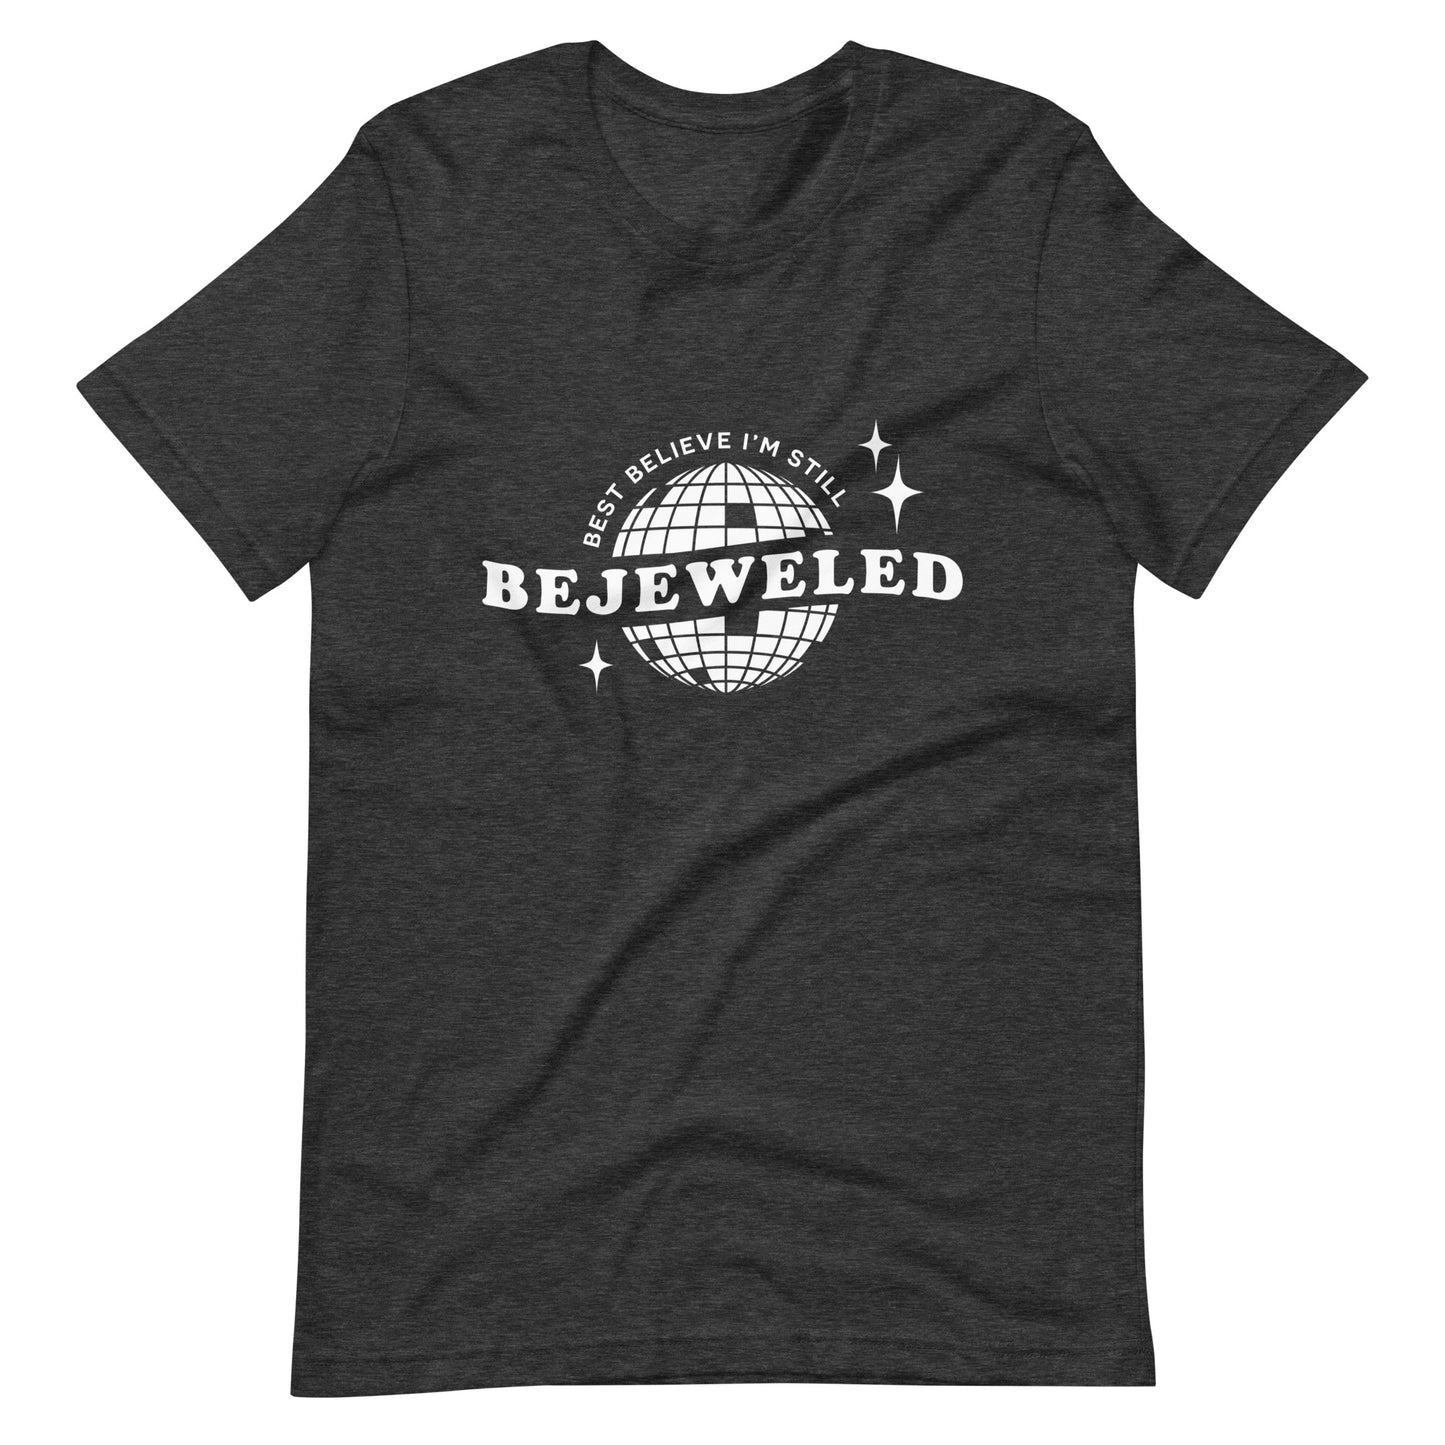 Still Bejeweled T-shirt - multiple color options